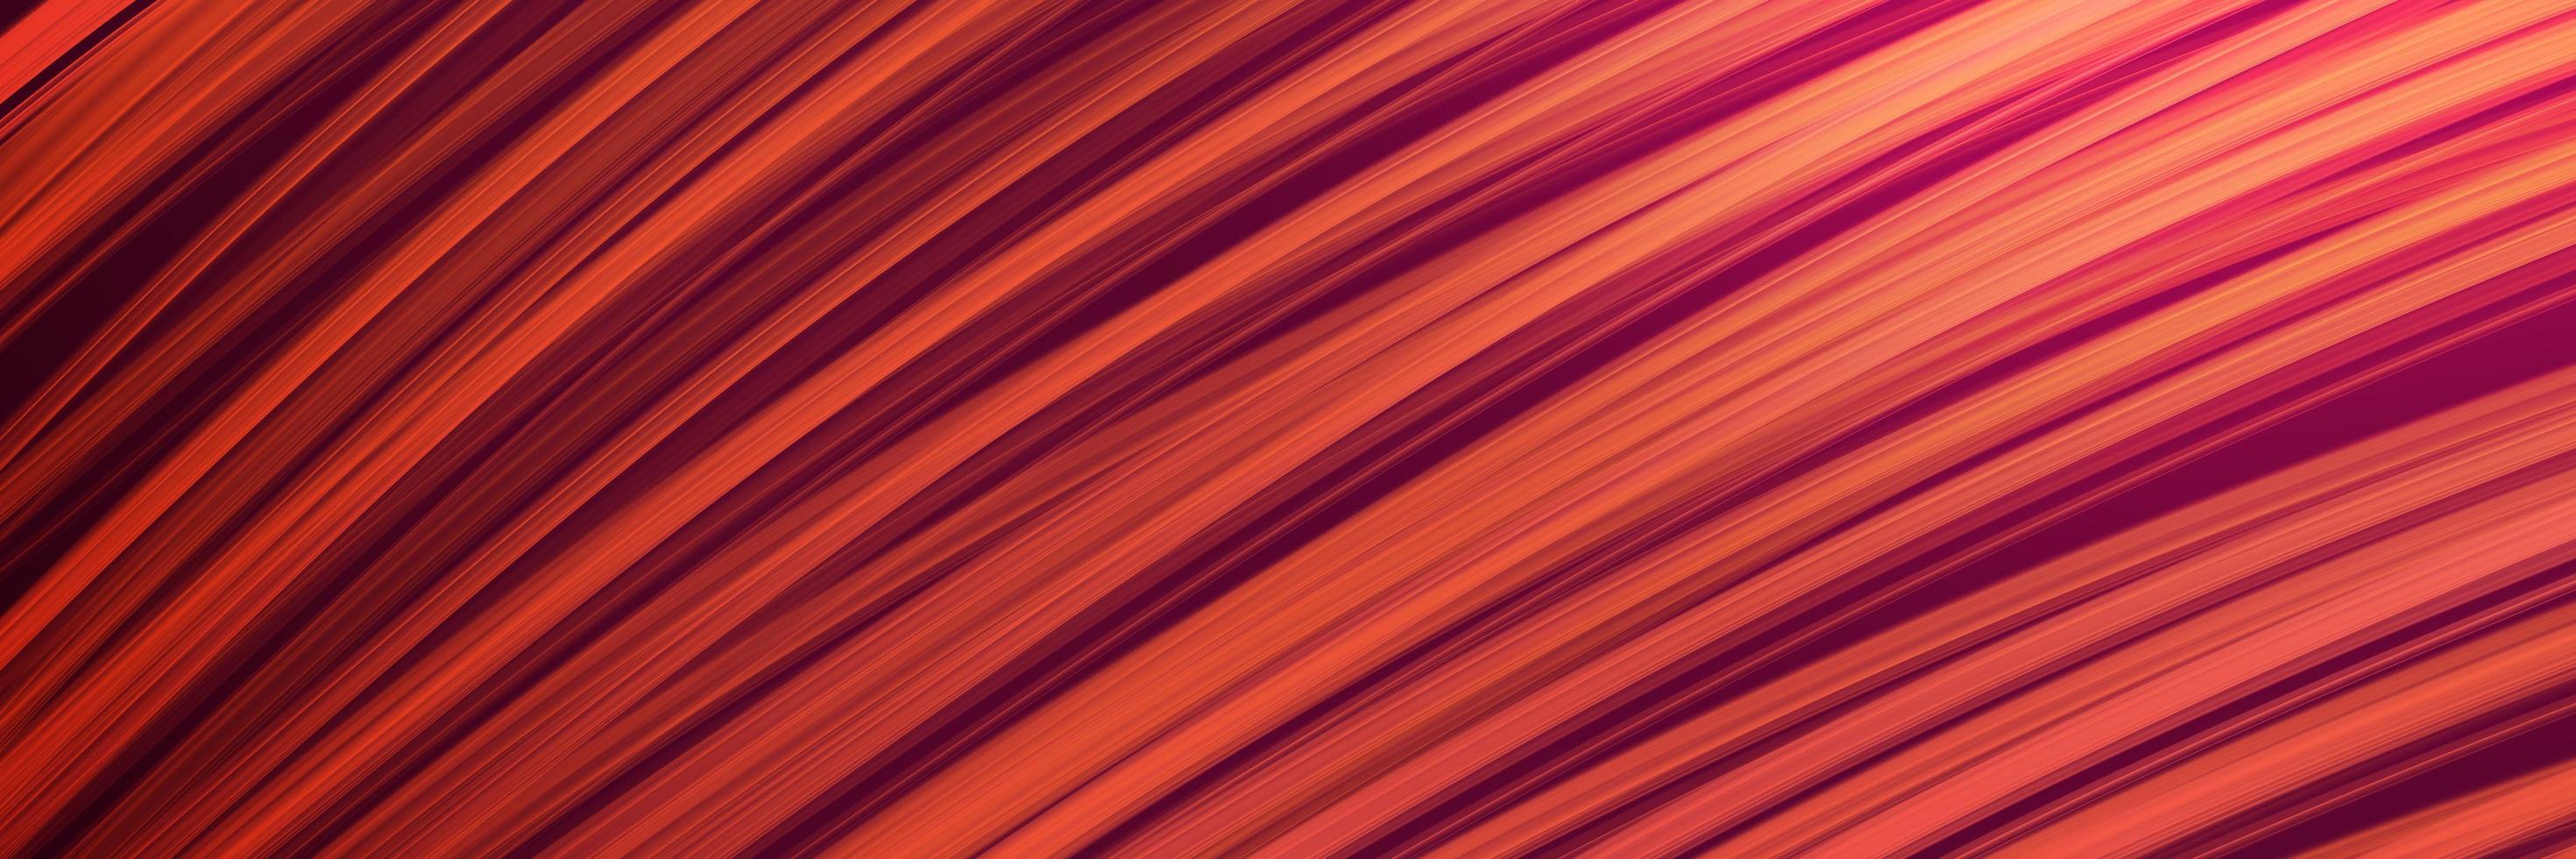 líneas patrón de fondo abstracto en color con temática de llamas. elementos de textura de pasto ondulado pintado para diseño creativo. foto